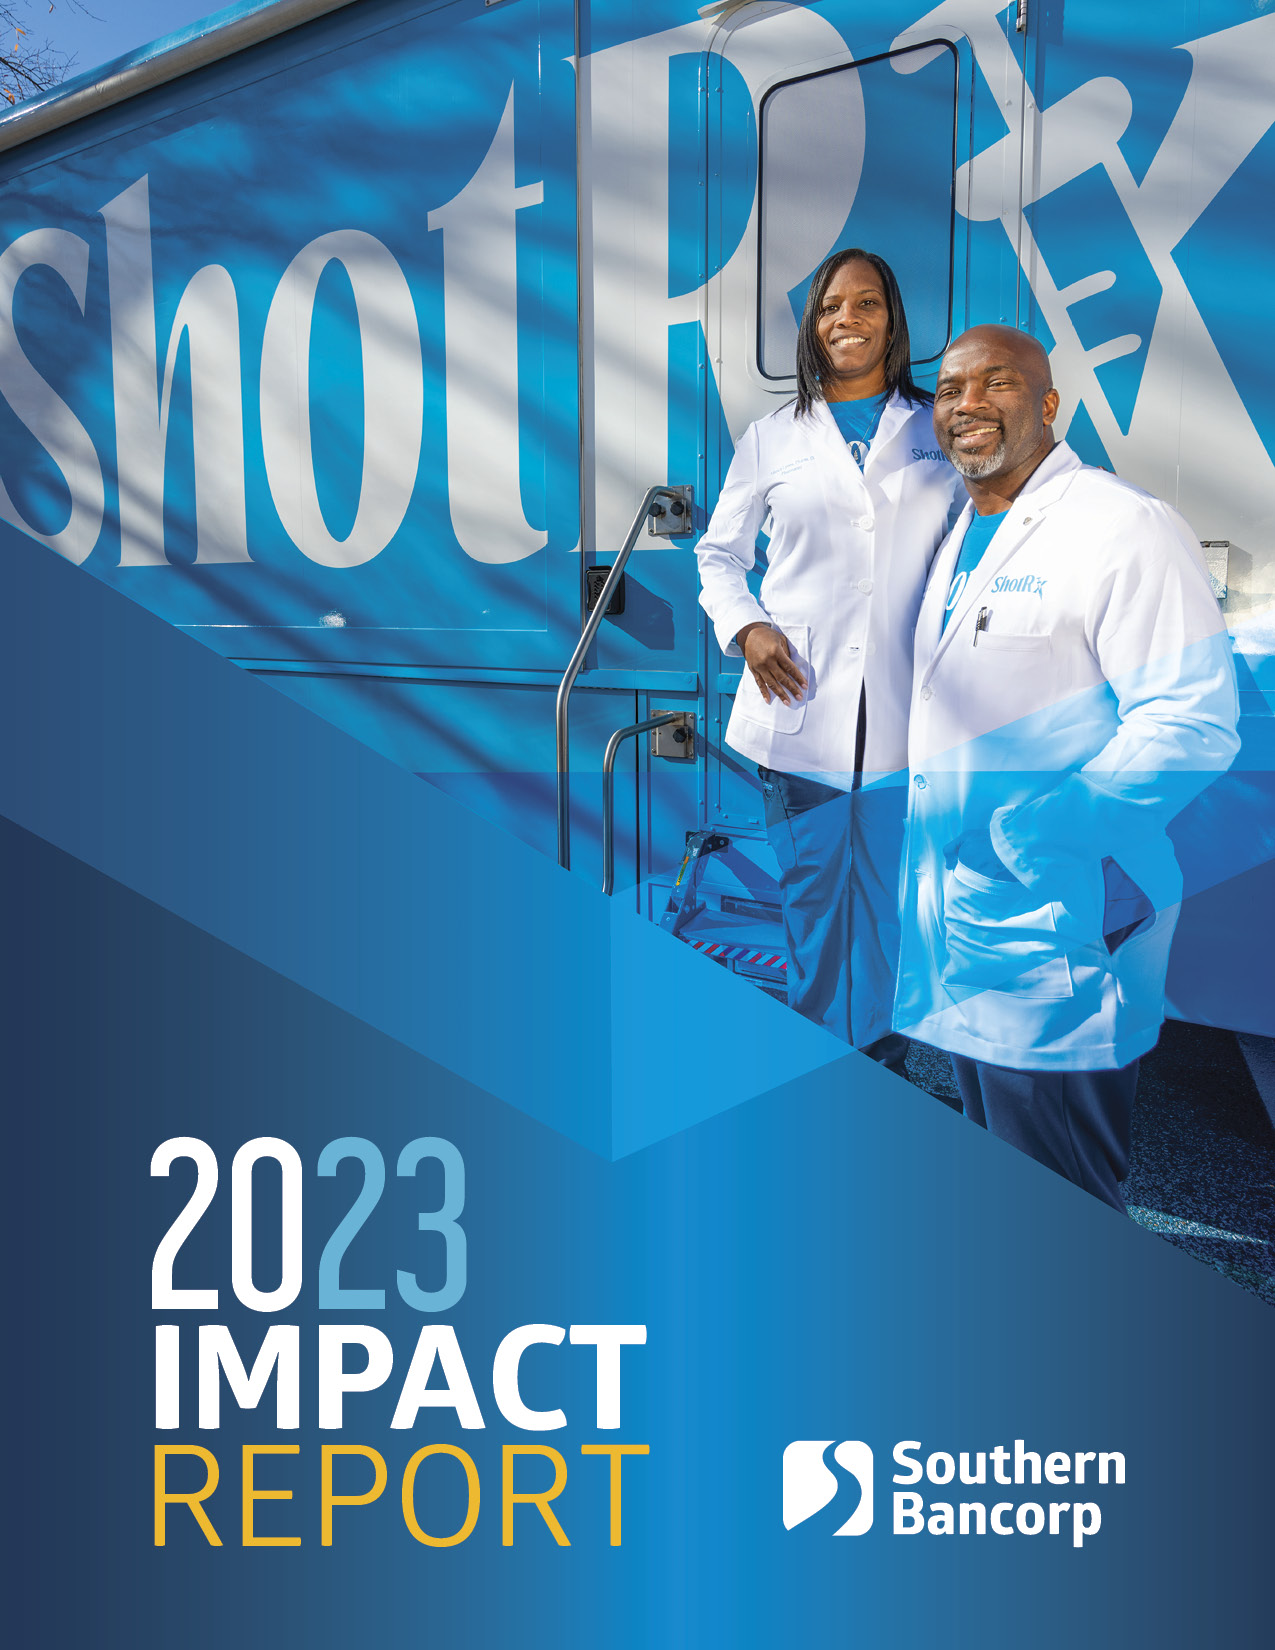 2015 Annual Report cover